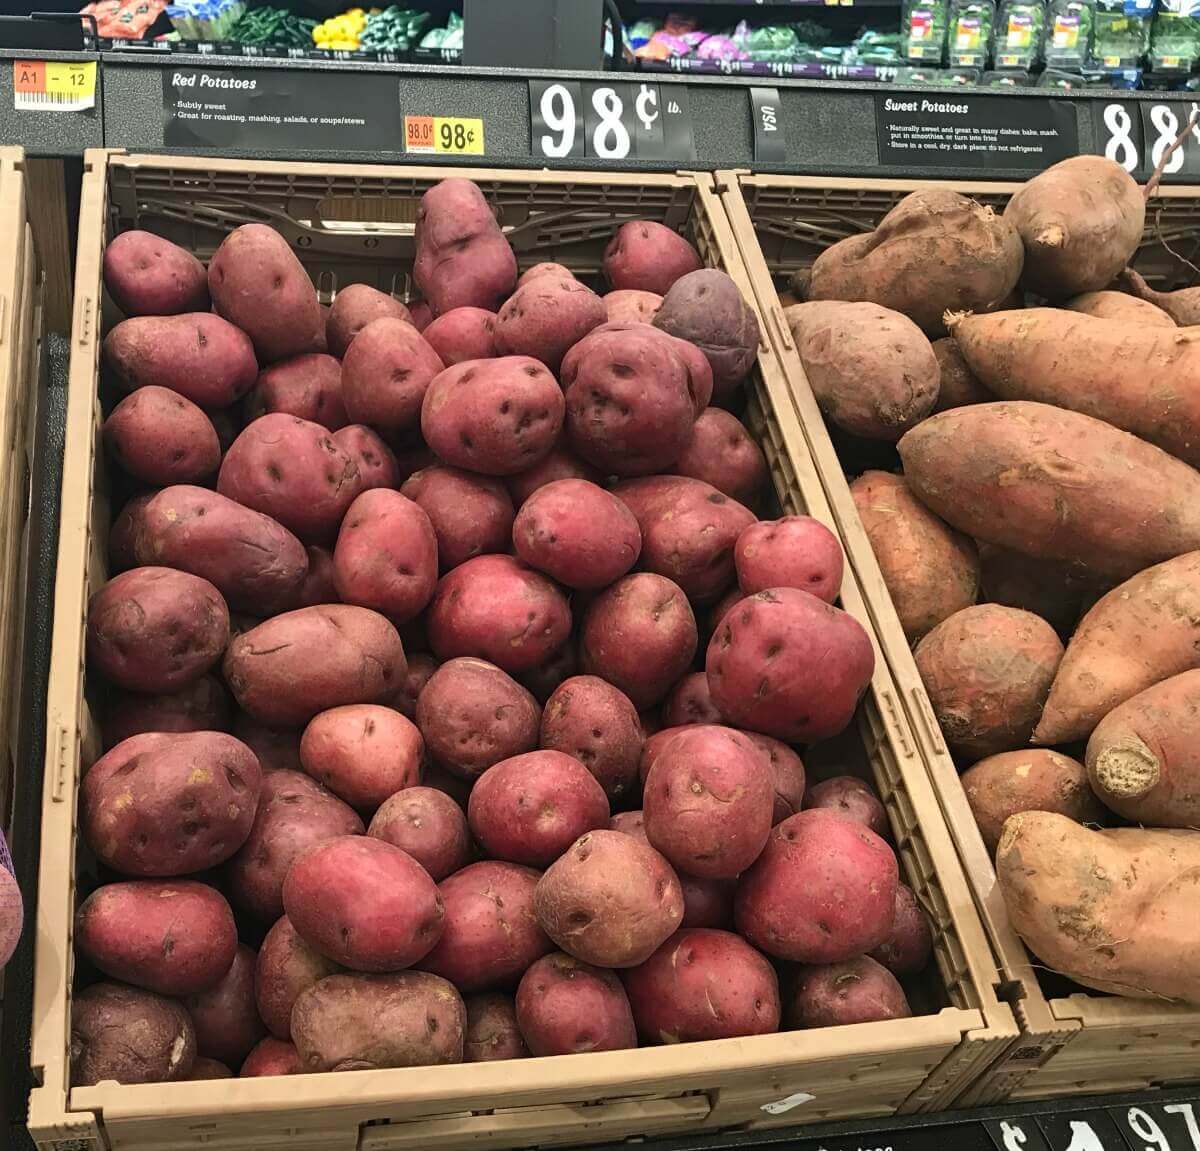 free-potatoes-at-walmart-target-shoprite-more-rebate-living